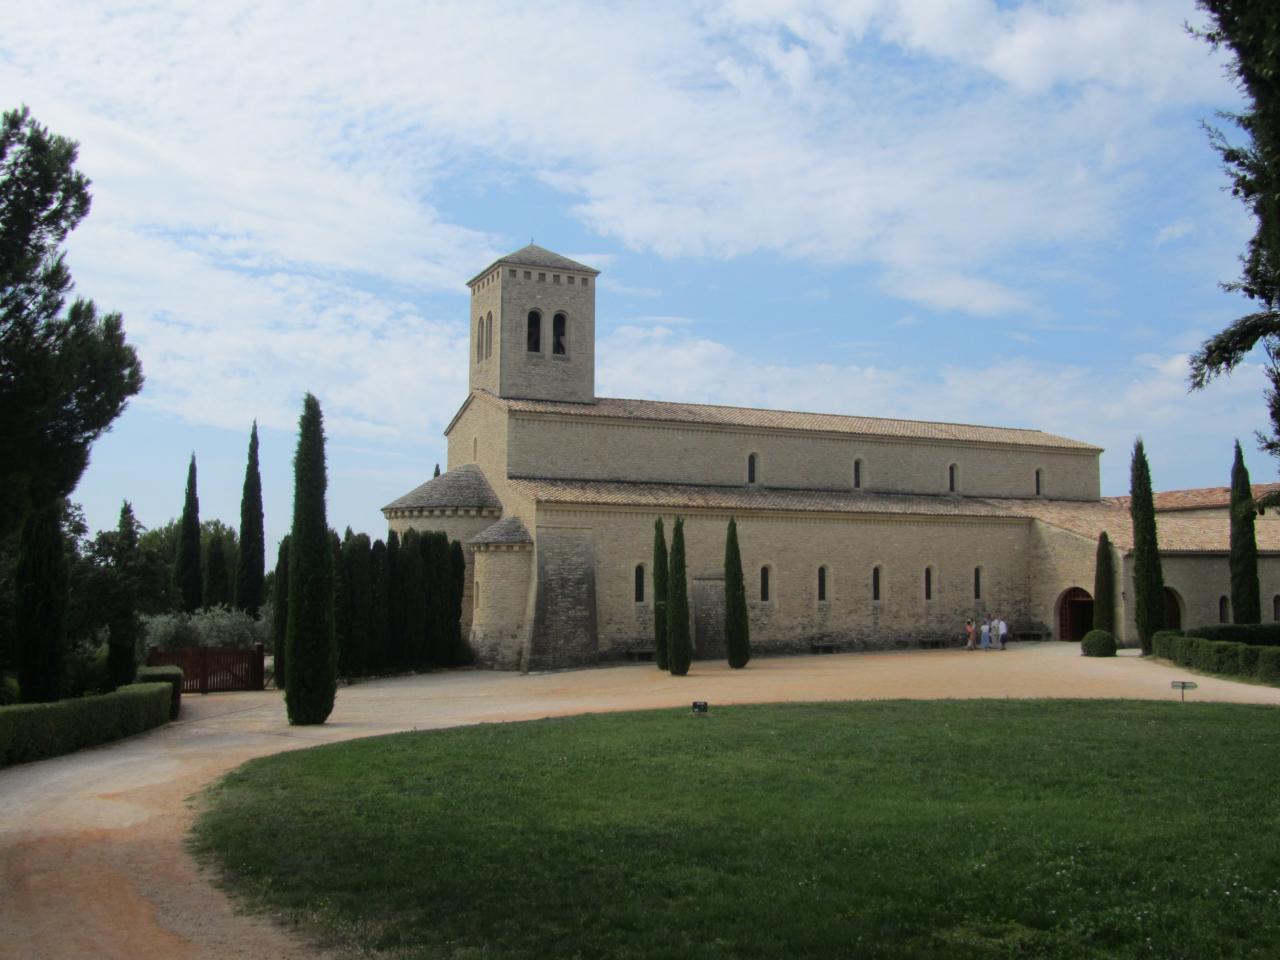 Abbaye Sainte-Madeleine du Barroux